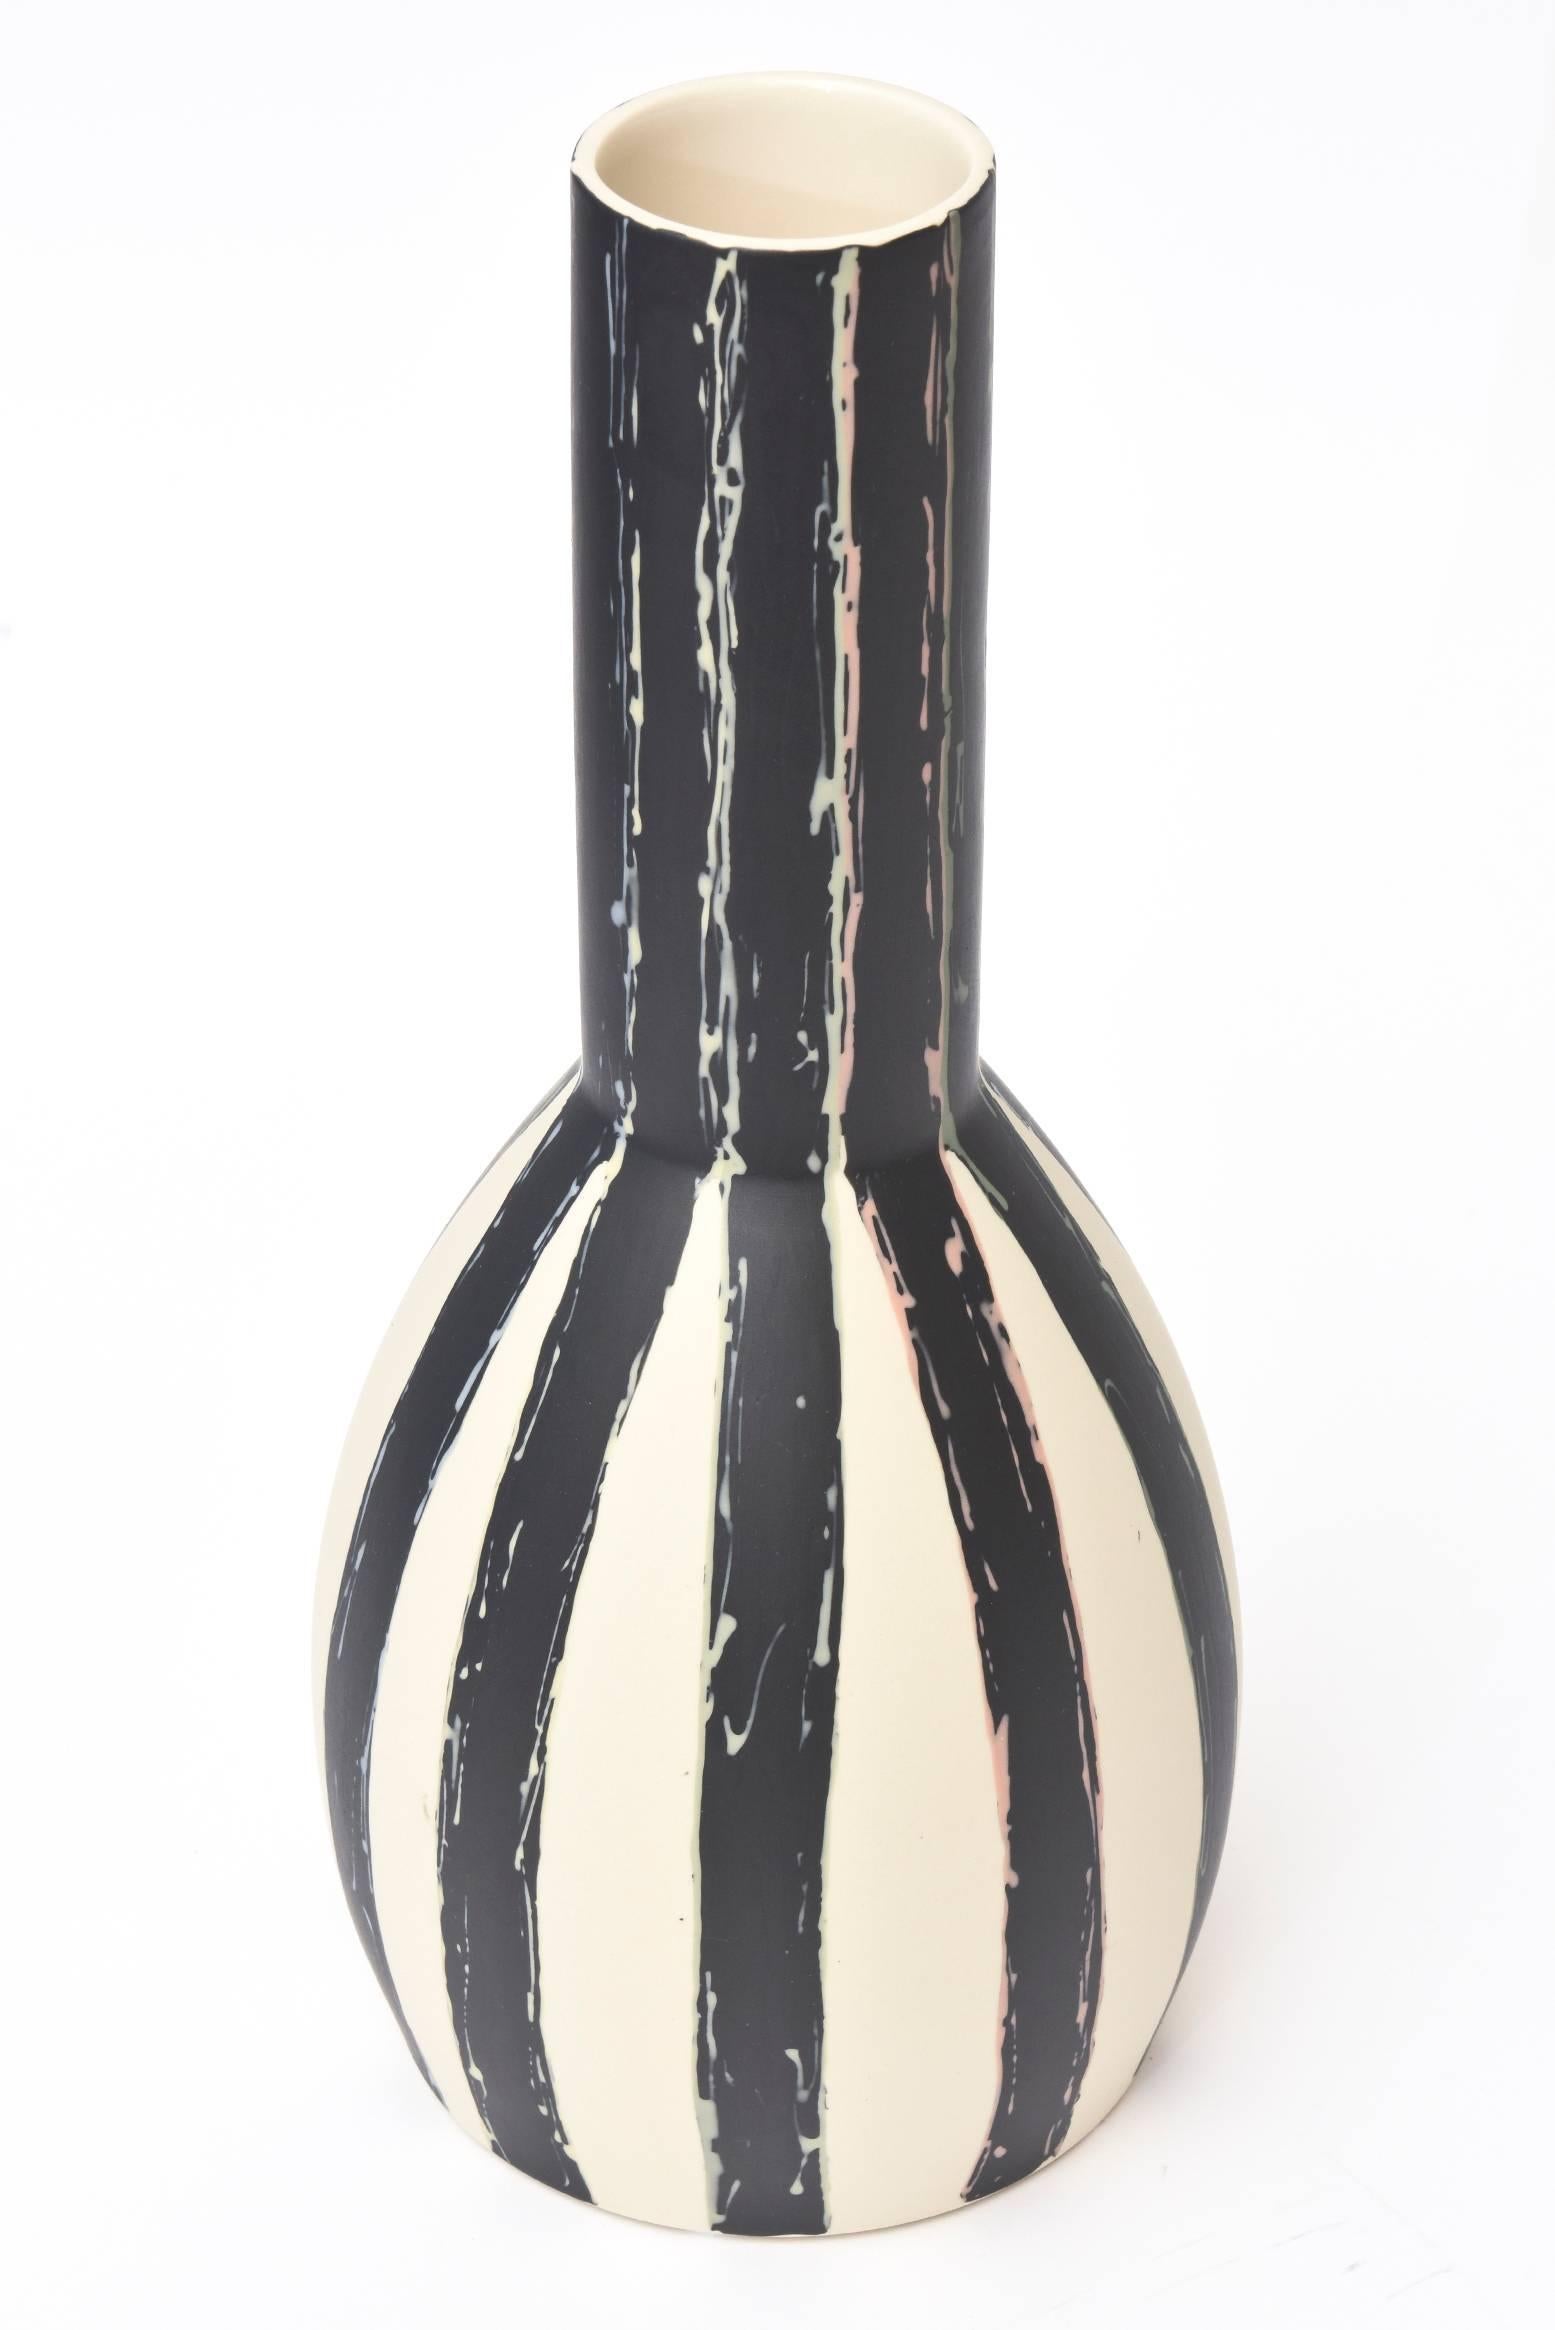 Organic Modern Ceramic Vase or Vessel Hand-Painted